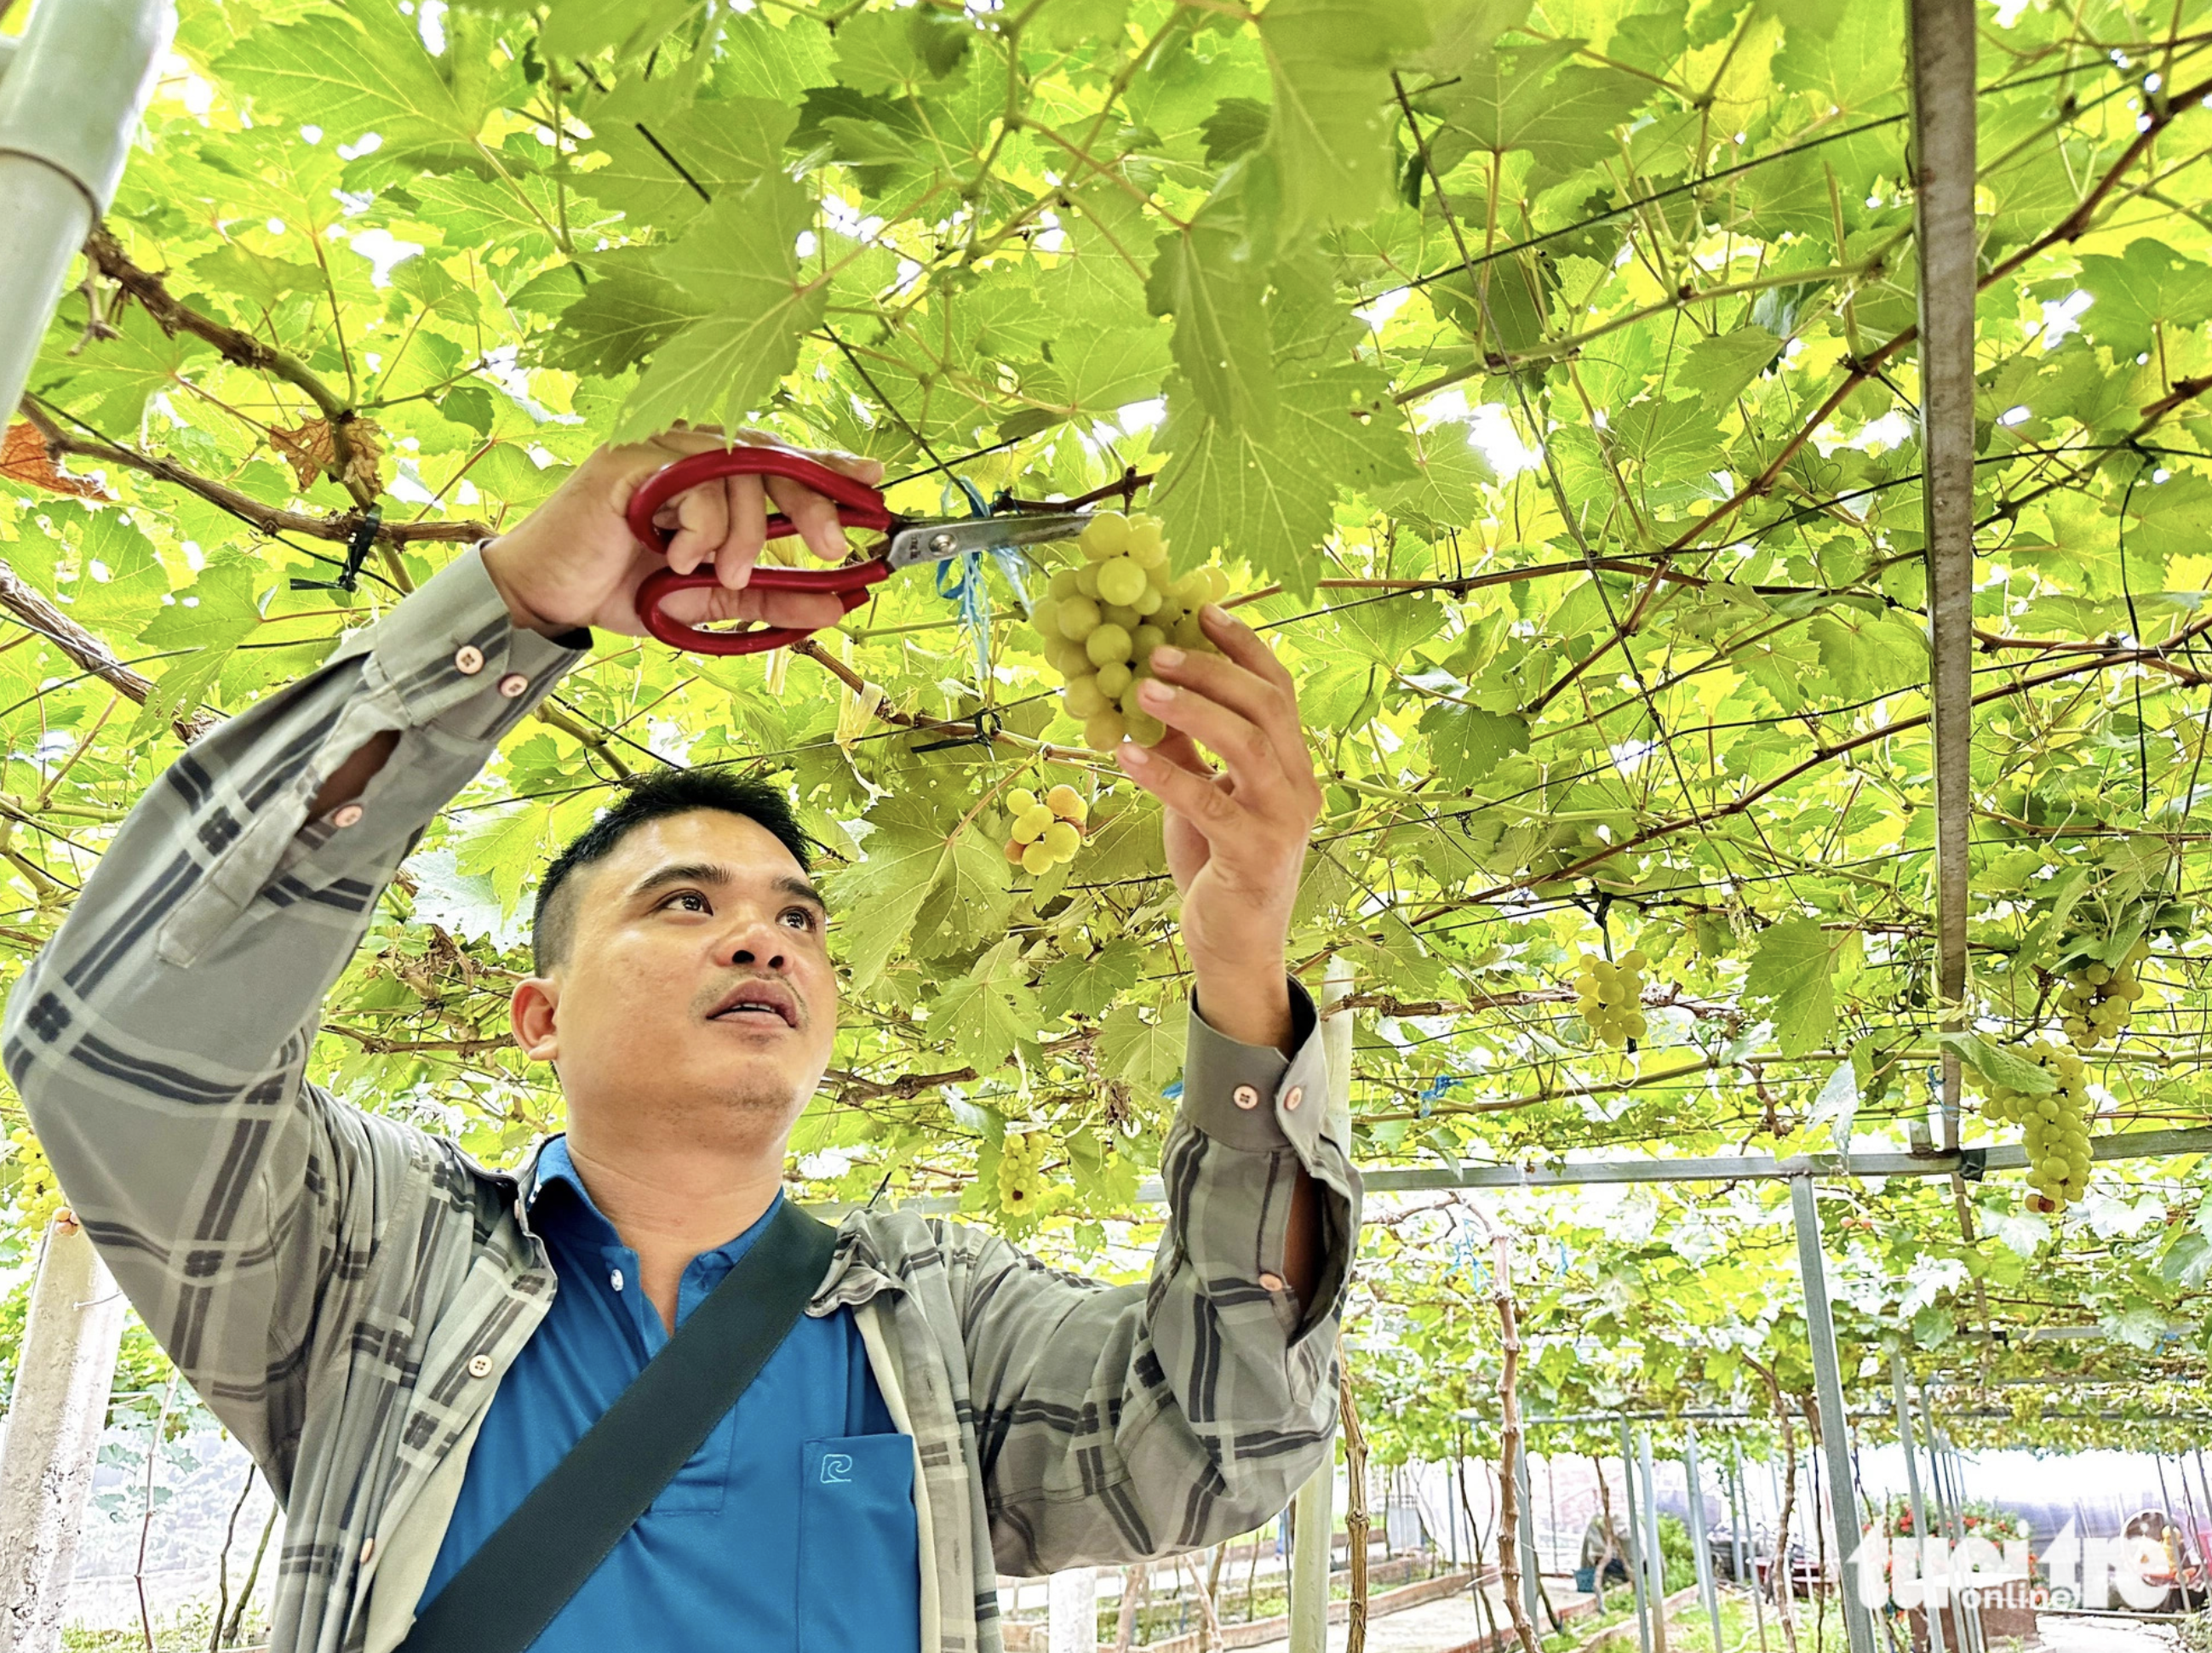 A visitor picks grapes at Xuan Tuoi Vineyard in Dong Thap Province. Photo: Dang Tuyet / Tuoi Tre